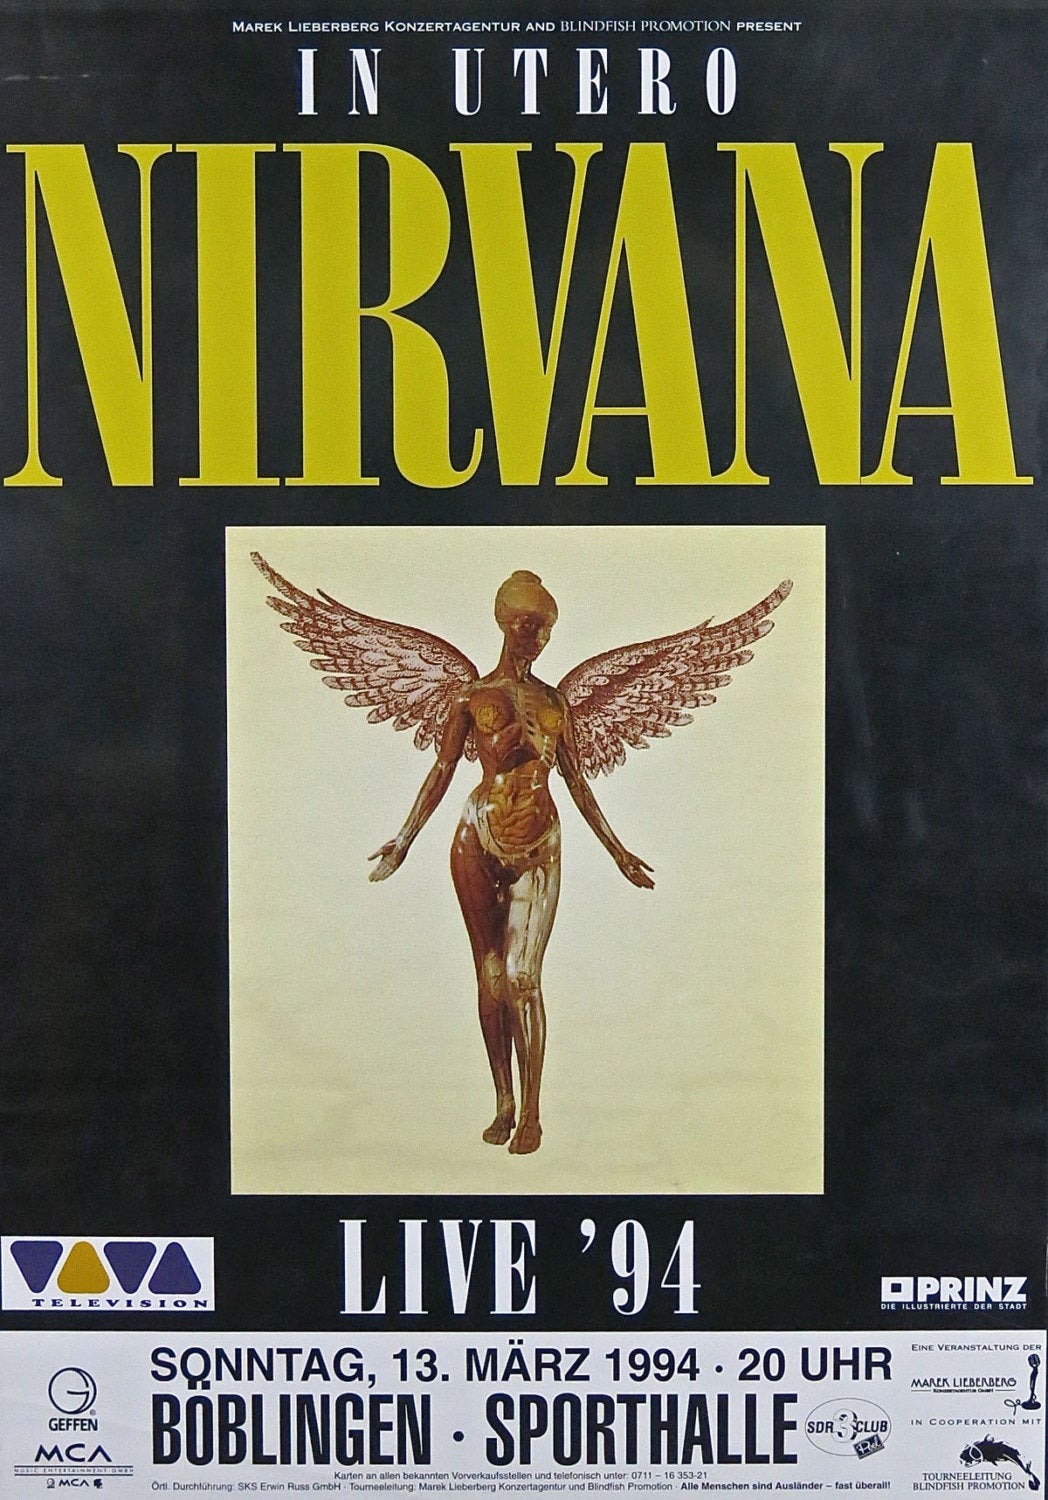 Vintage Music Art Poster - Nirvana Live 94 - 0534